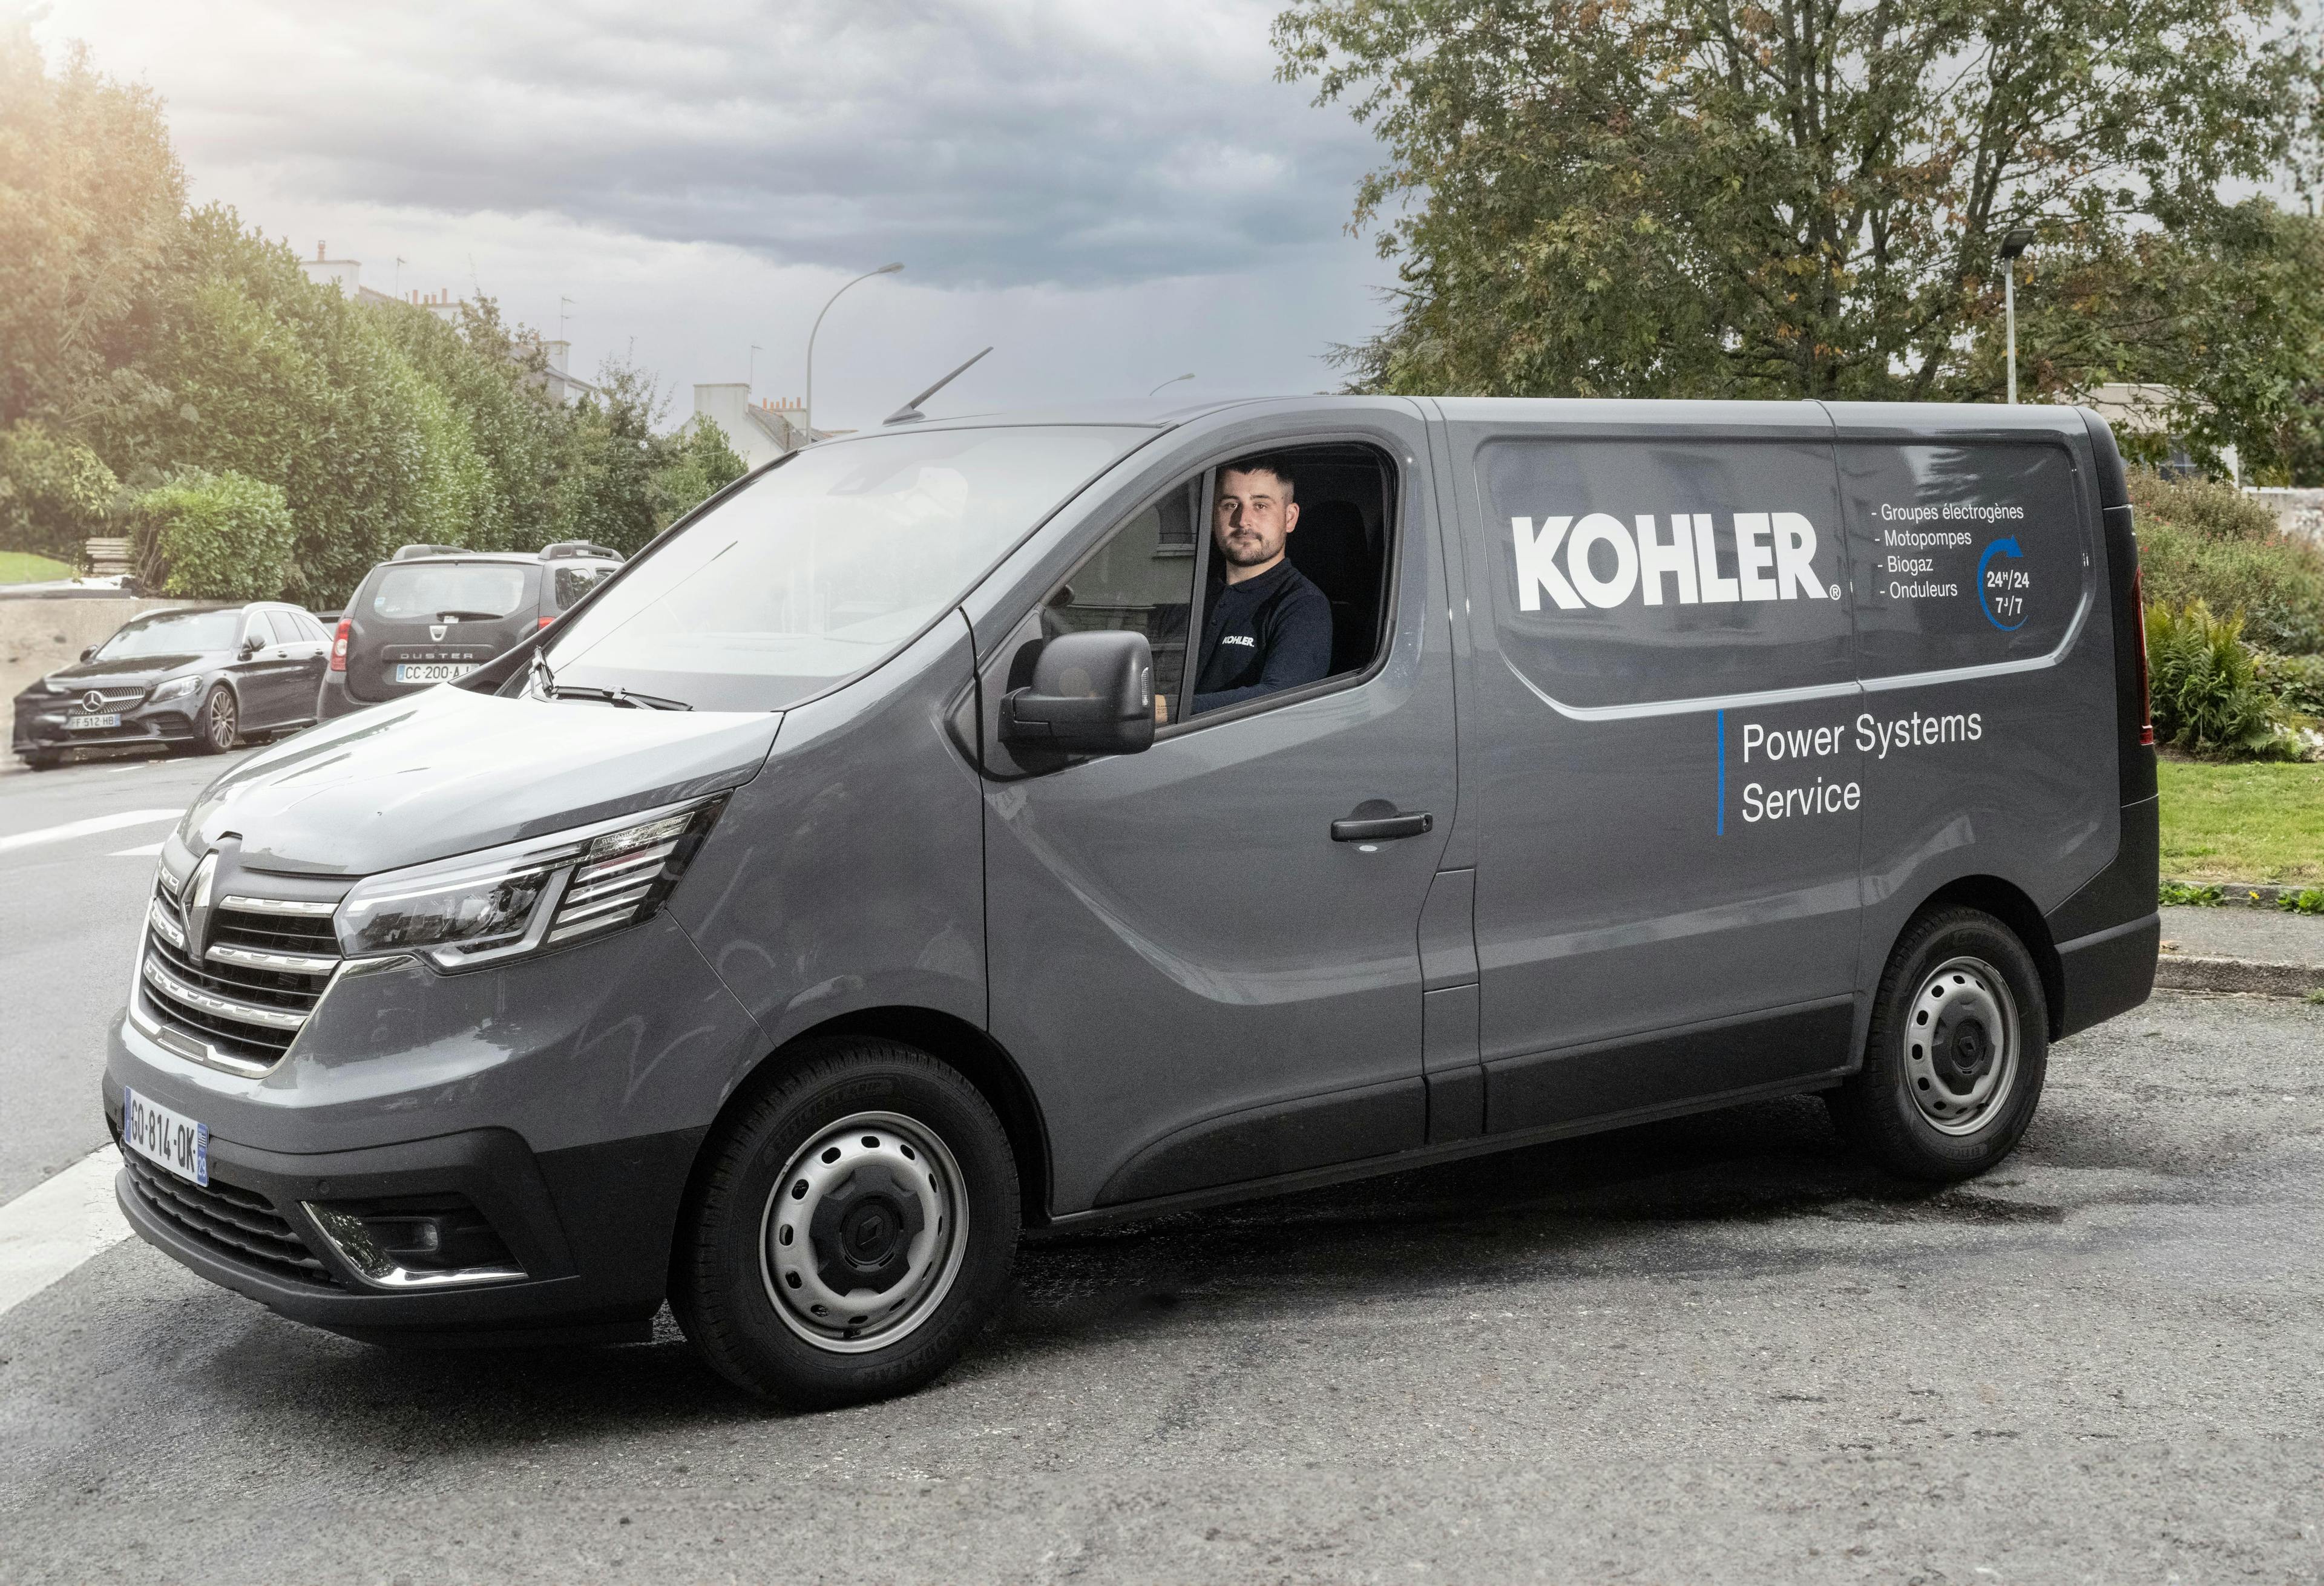 Kohler service vehicle: assistance, breakdown service, renovation